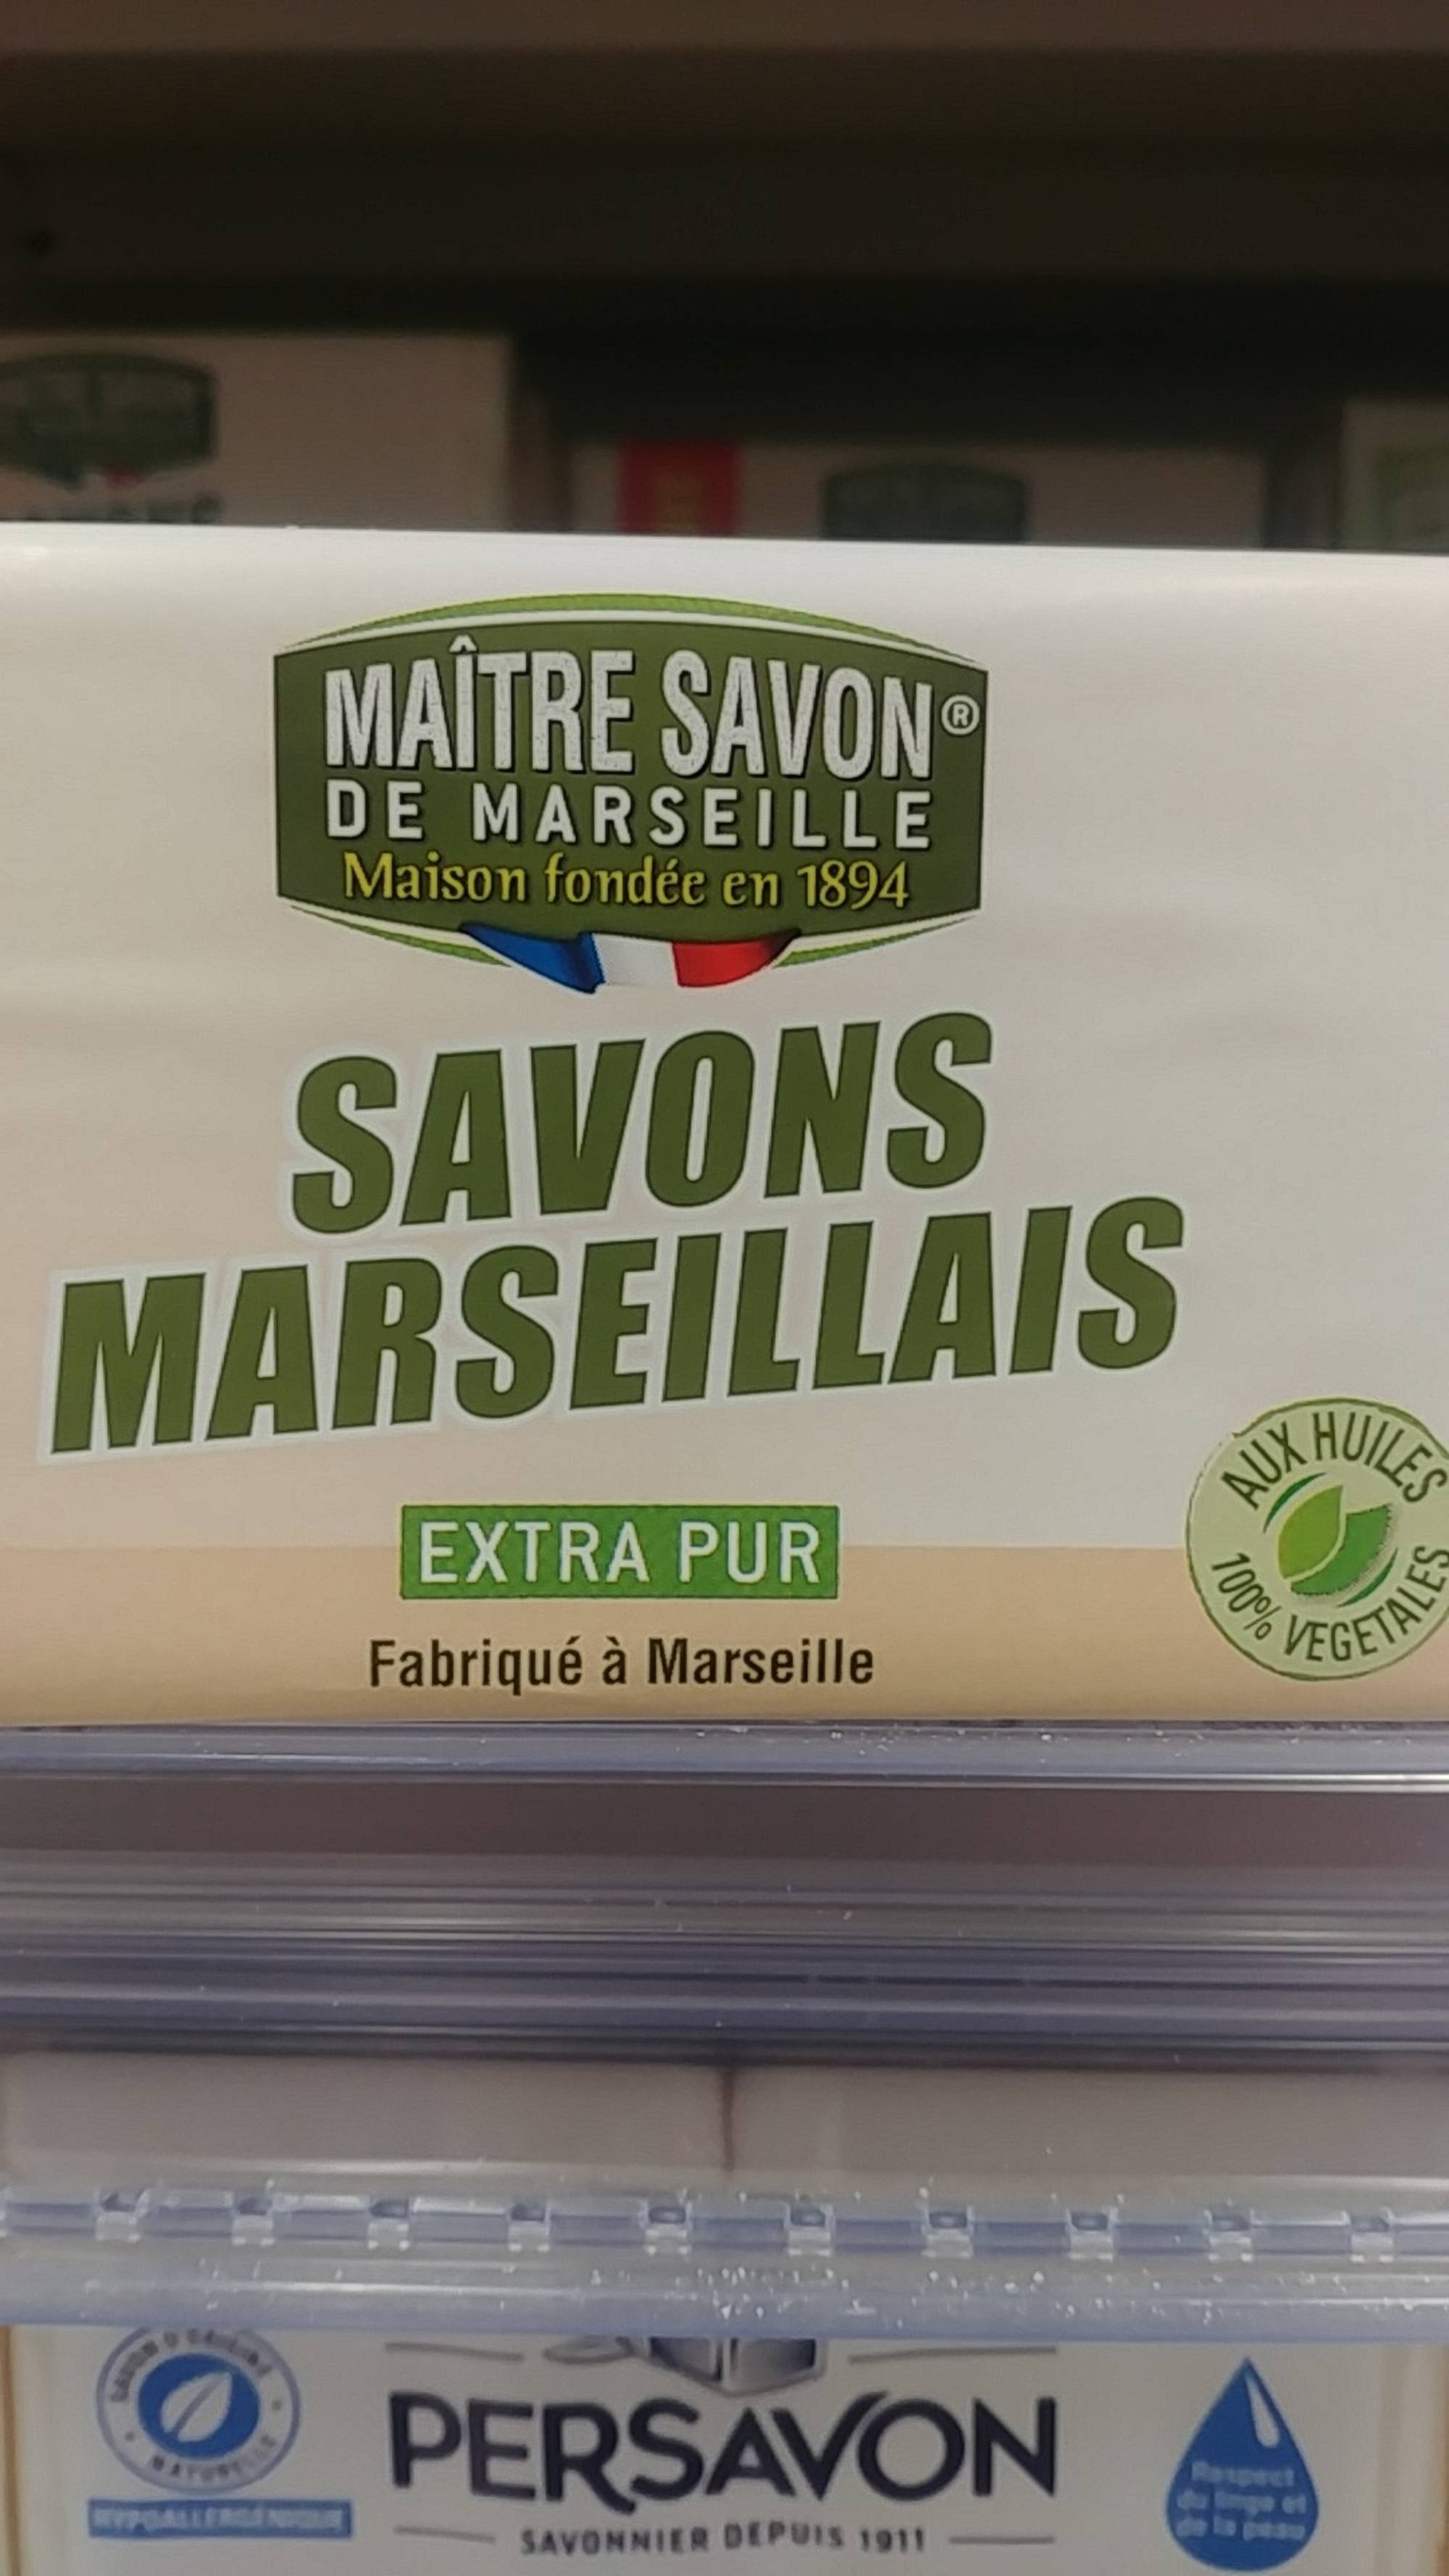 MAÎTRE SAVON DE MARSEILLE - Savons marseillais extra pur